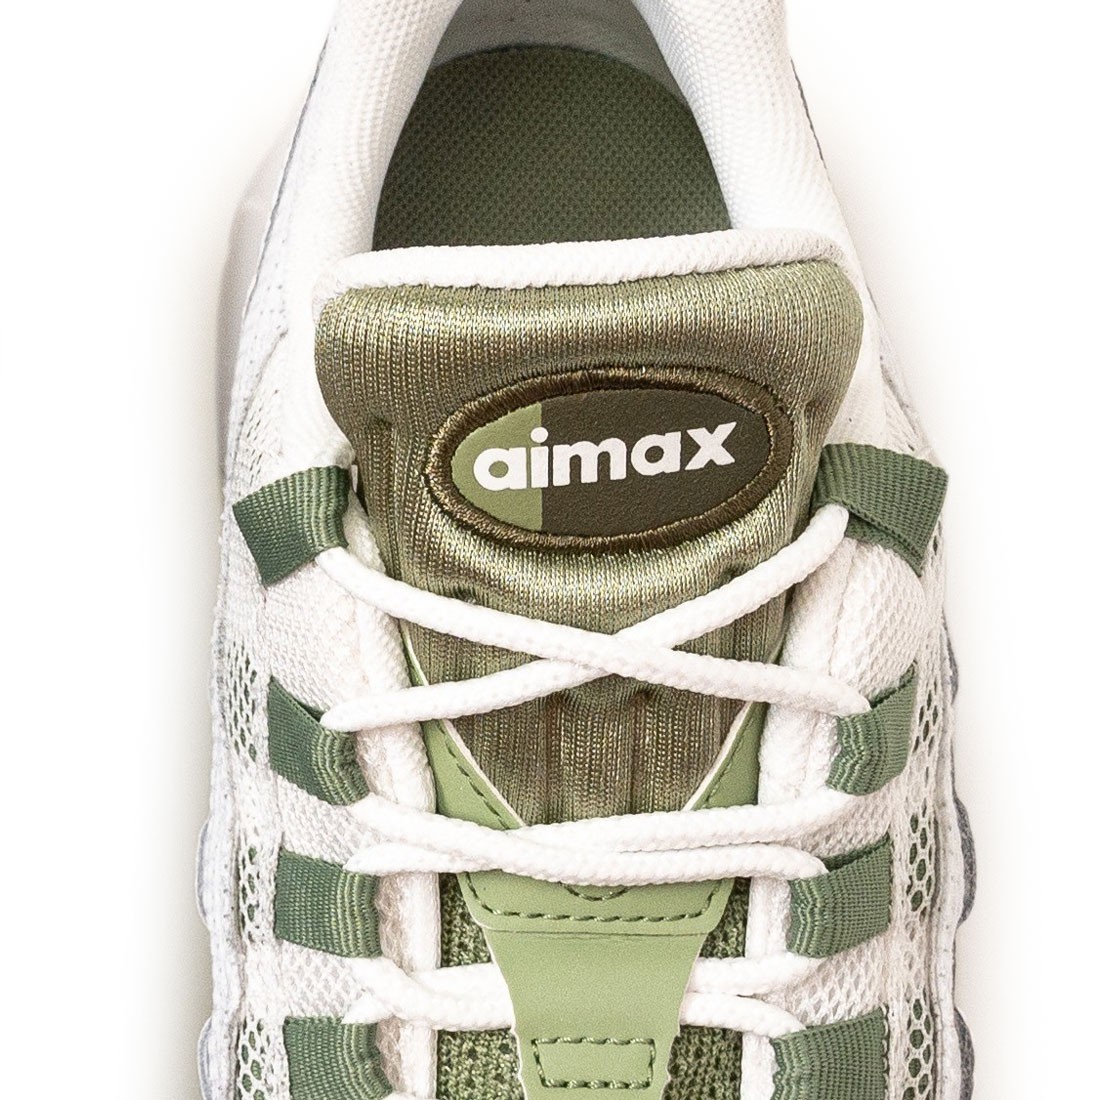 Nike Air Max 95 - White / Oil Green / Medium Olive 8.5